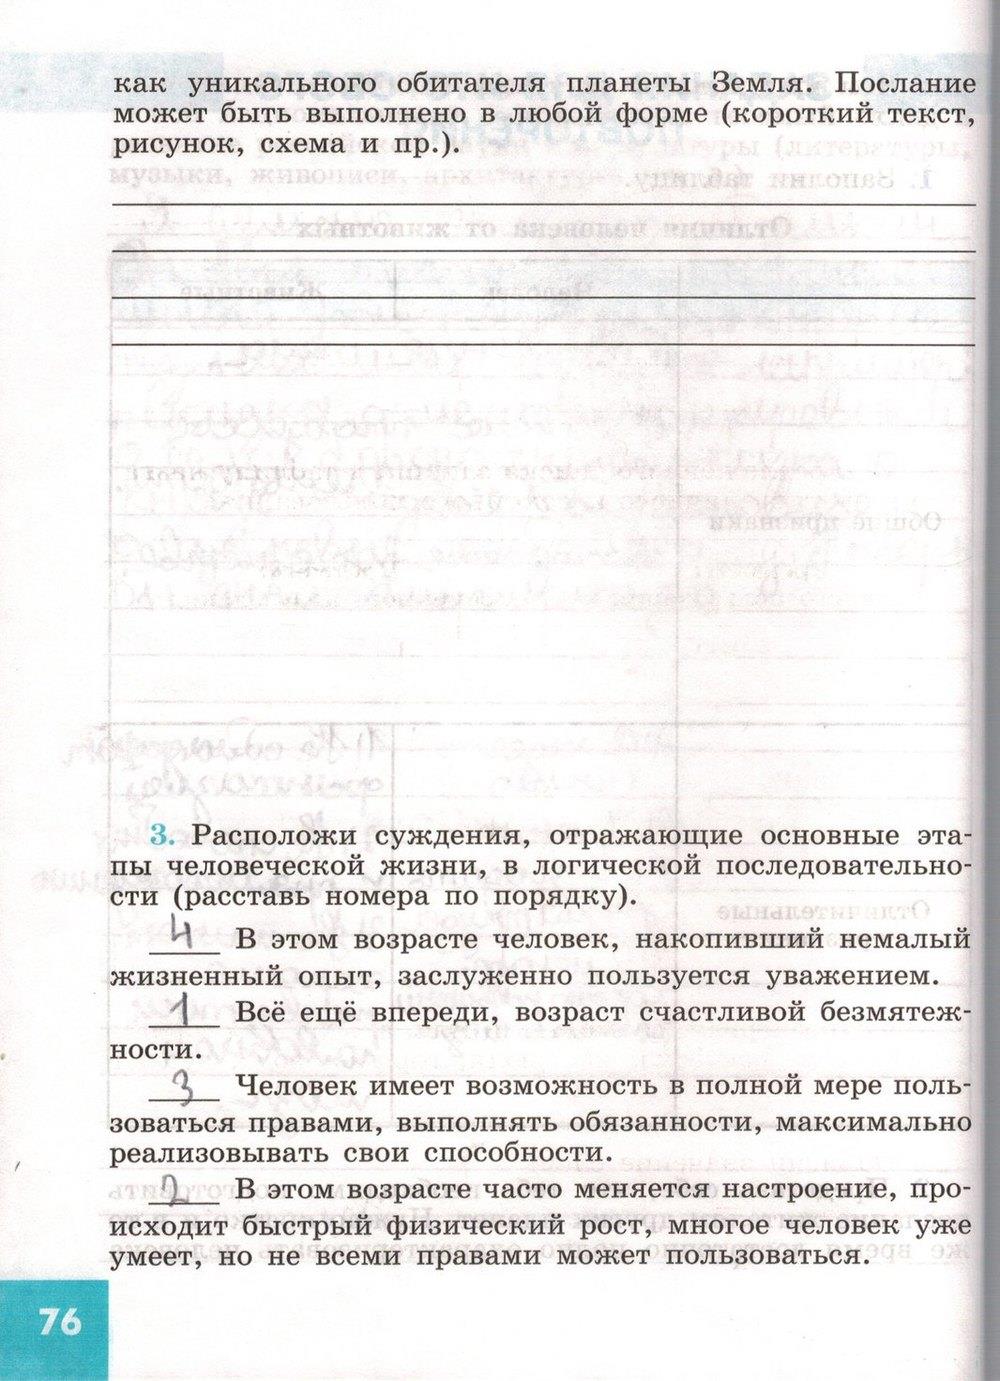 гдз 5 класс рабочая тетрадь страница 76 обществознание Иванова, Хотеенкова